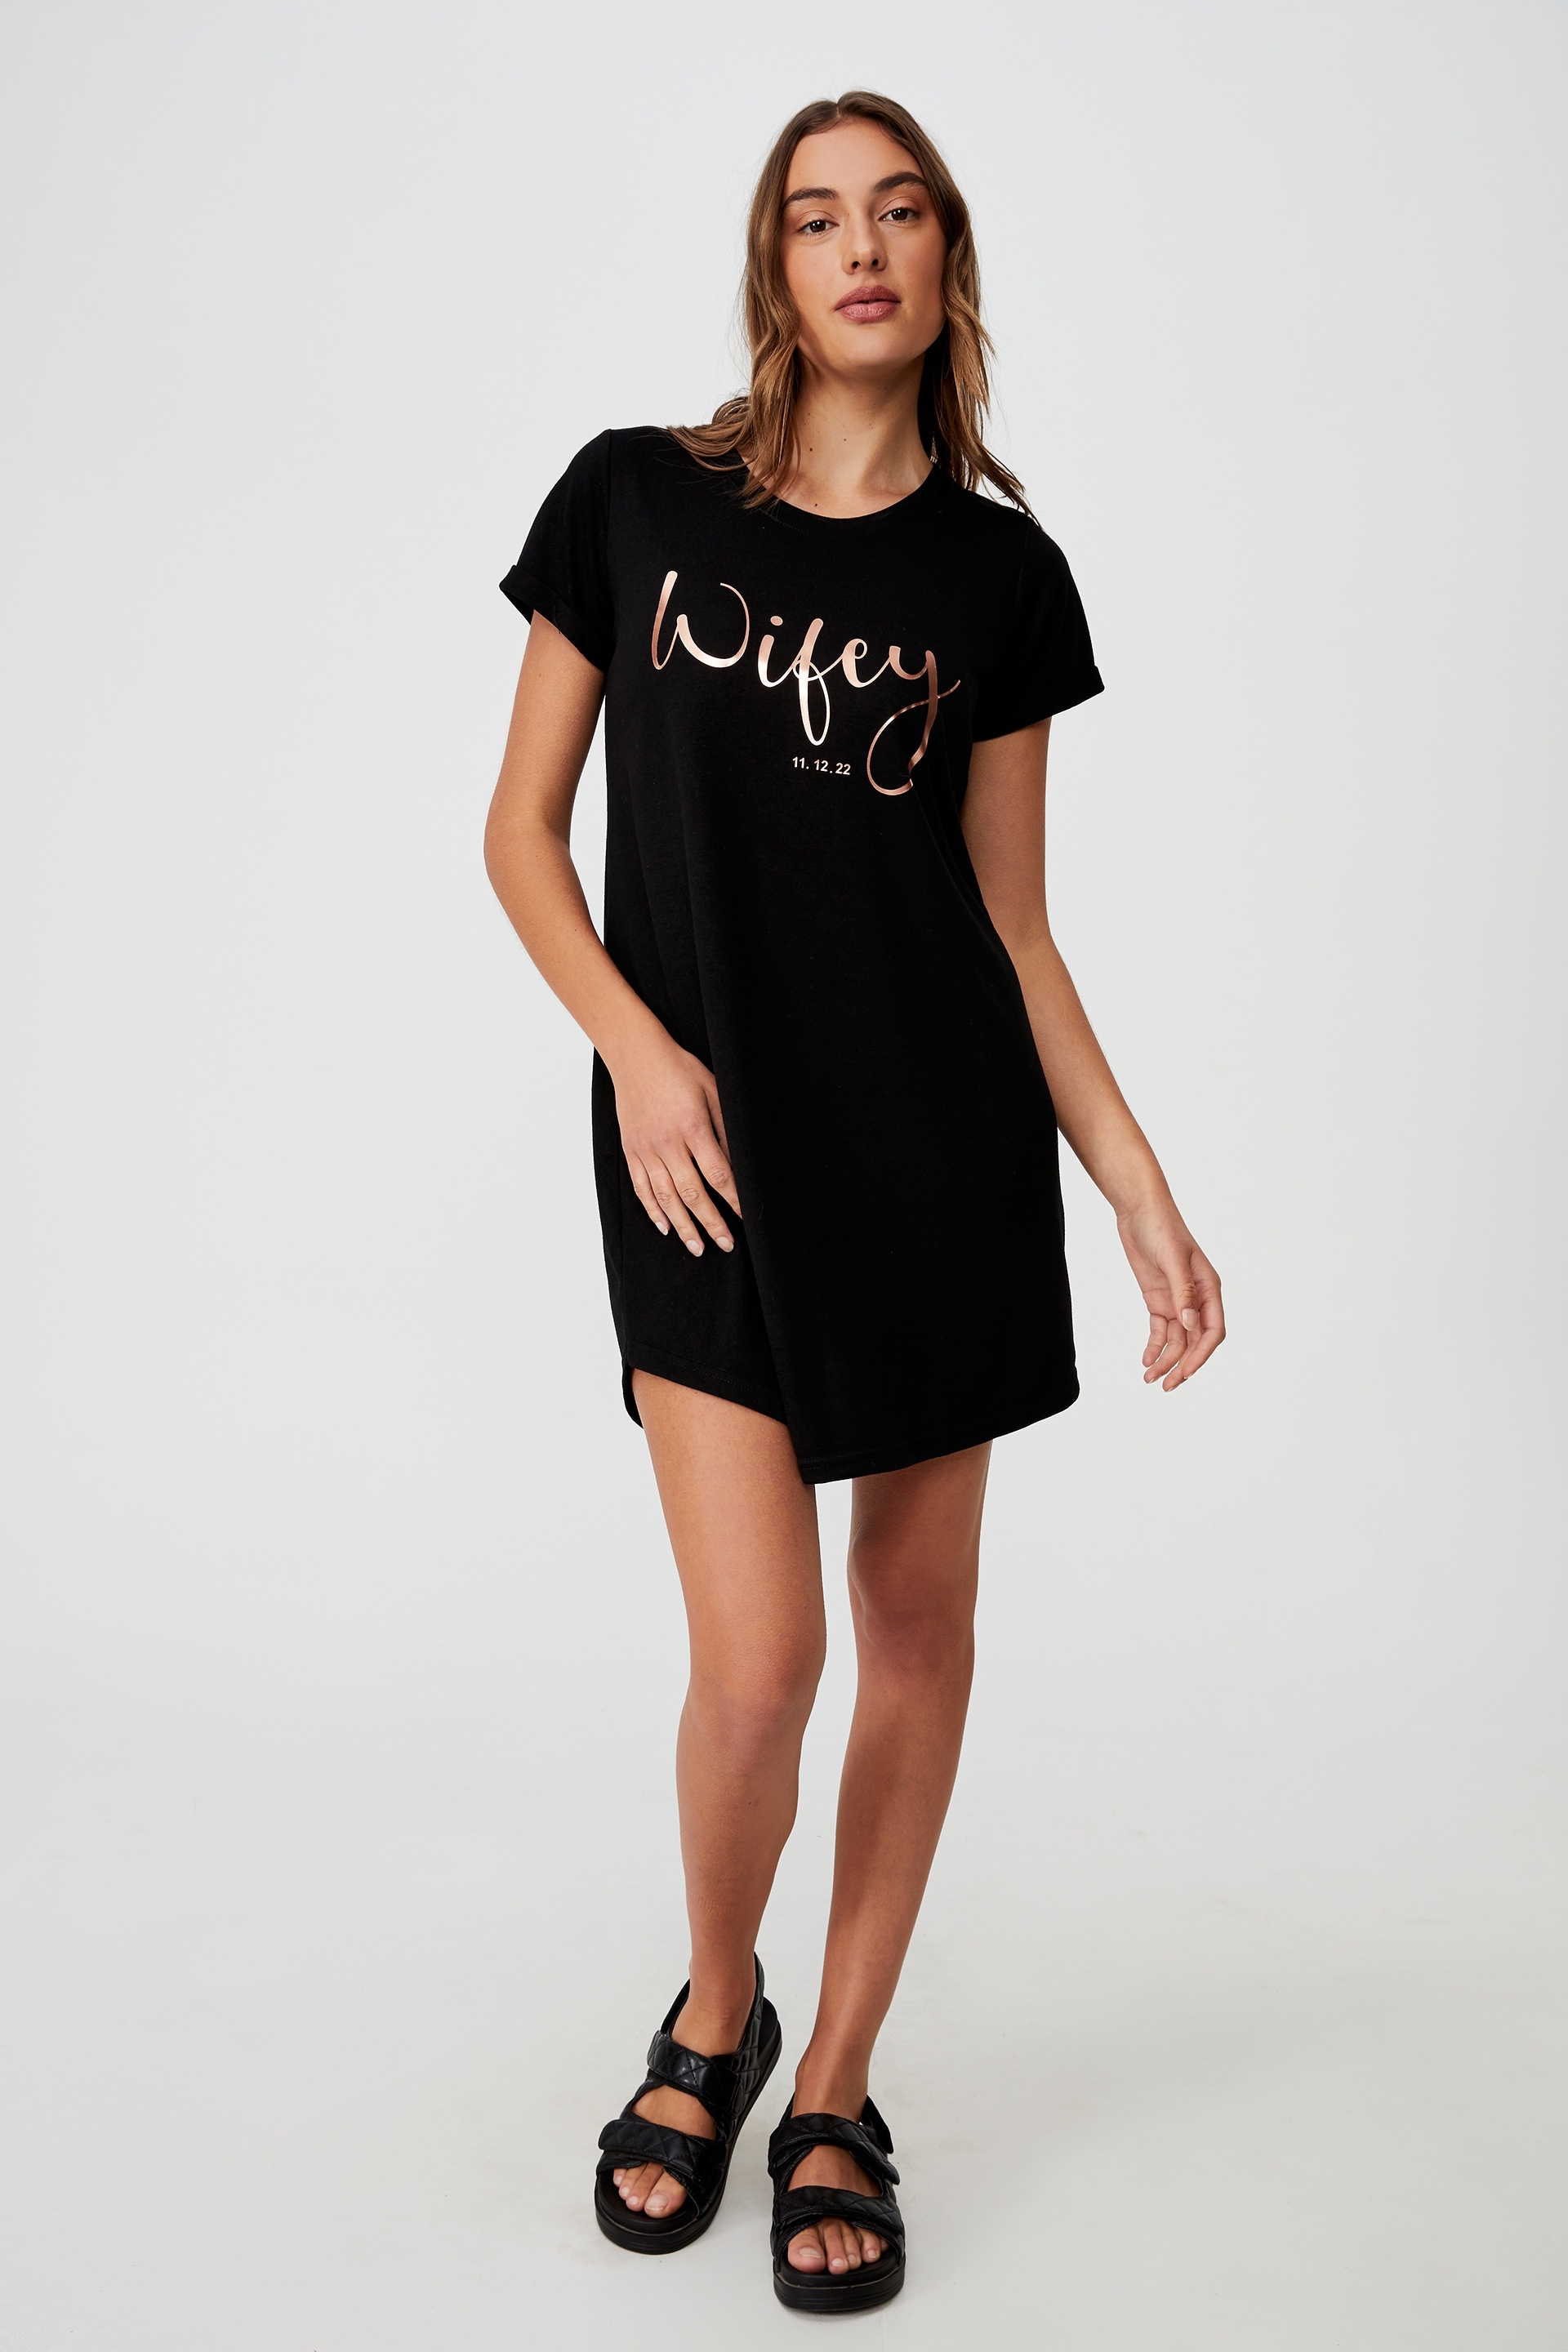 Cotton On Women - Personalised Tina Tshirt Dress - Black